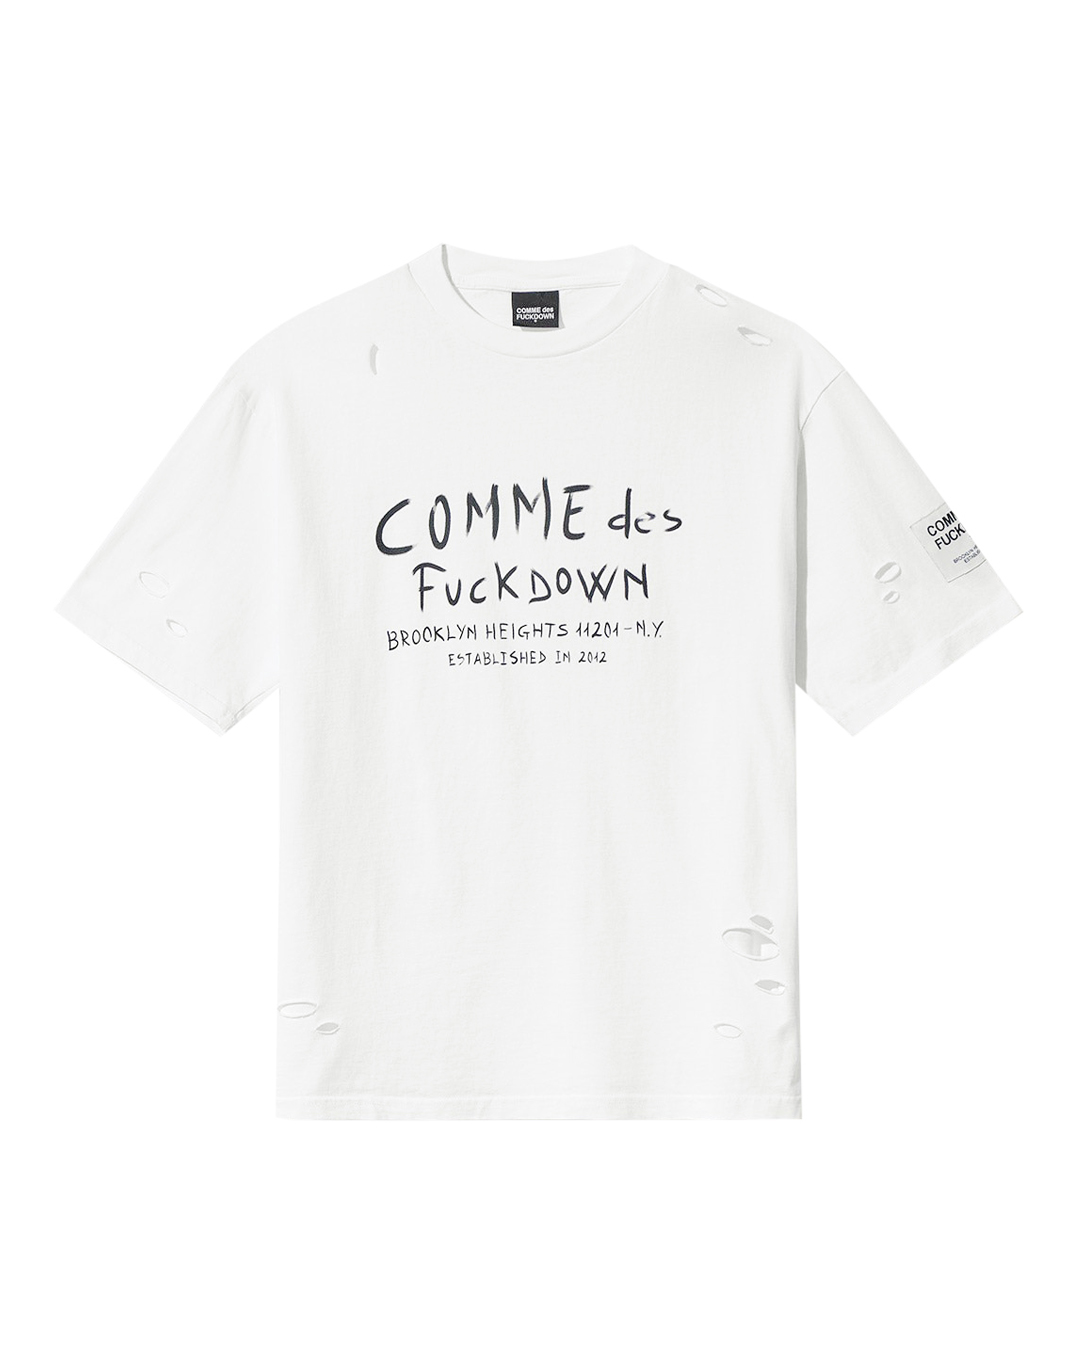 футболка COMME des FUCKDOWN тексты с дырками и хвостами